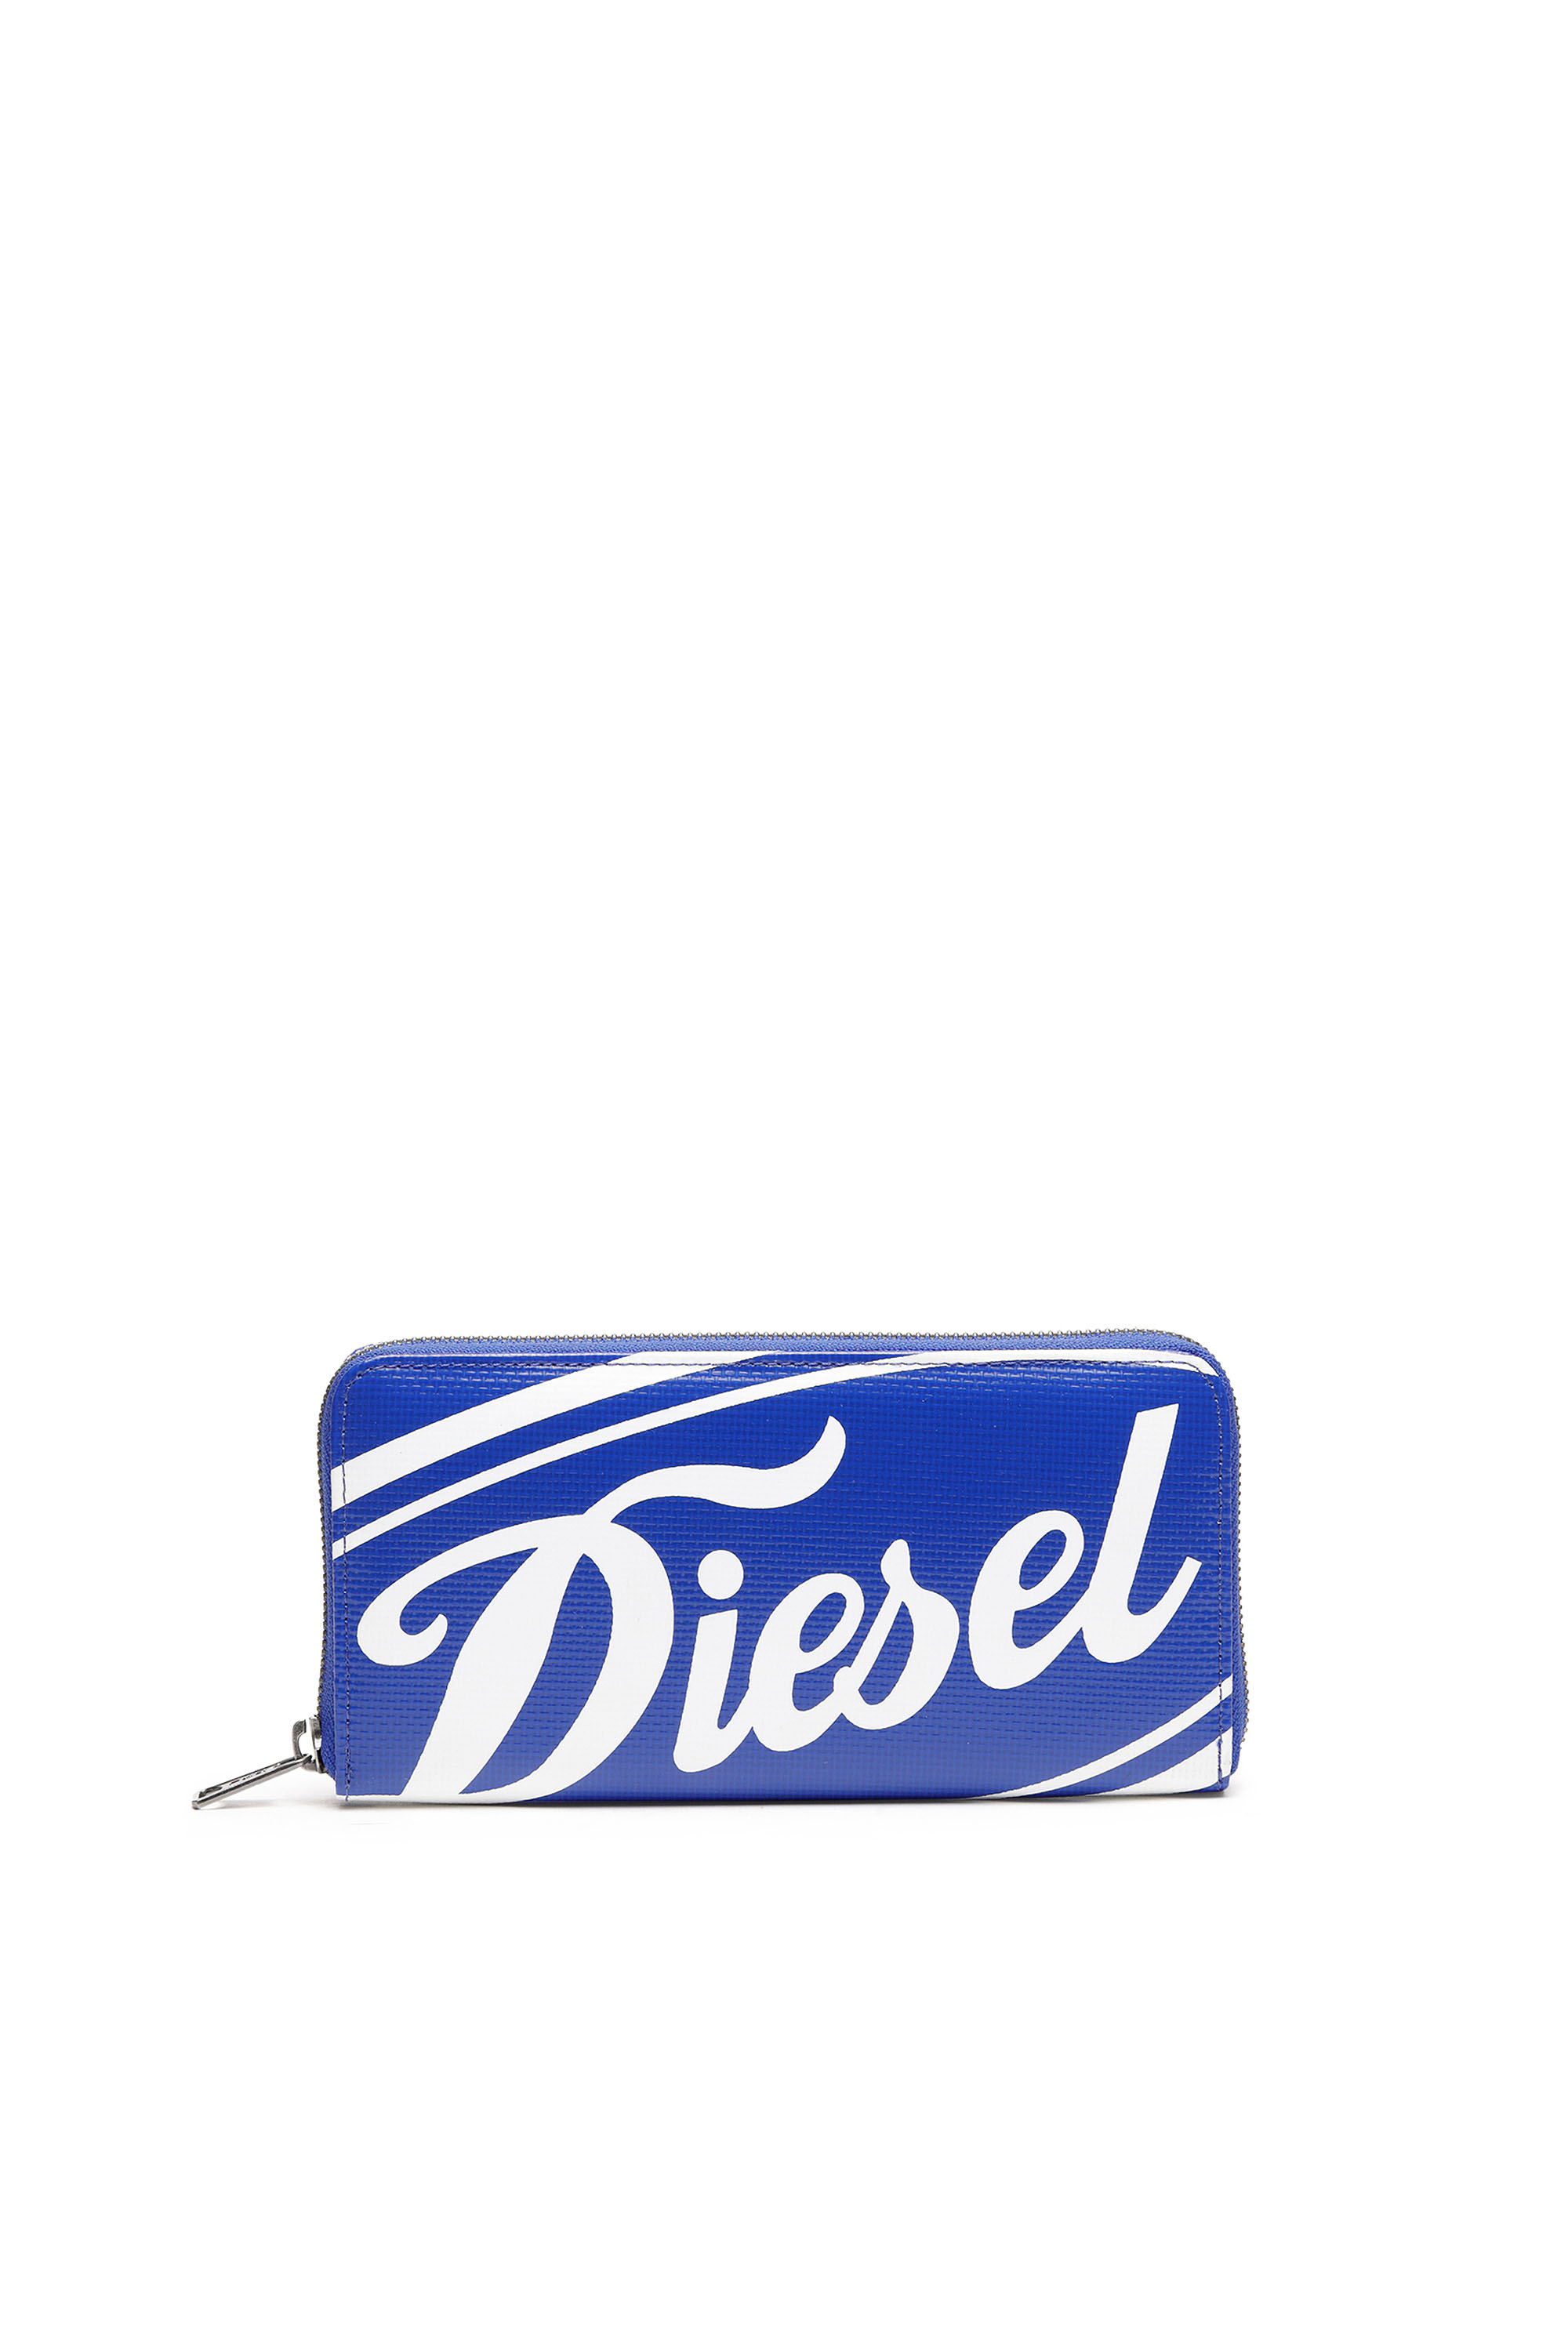 Diesel - 24 ZIP, Azul marino/Blanco - Image 1